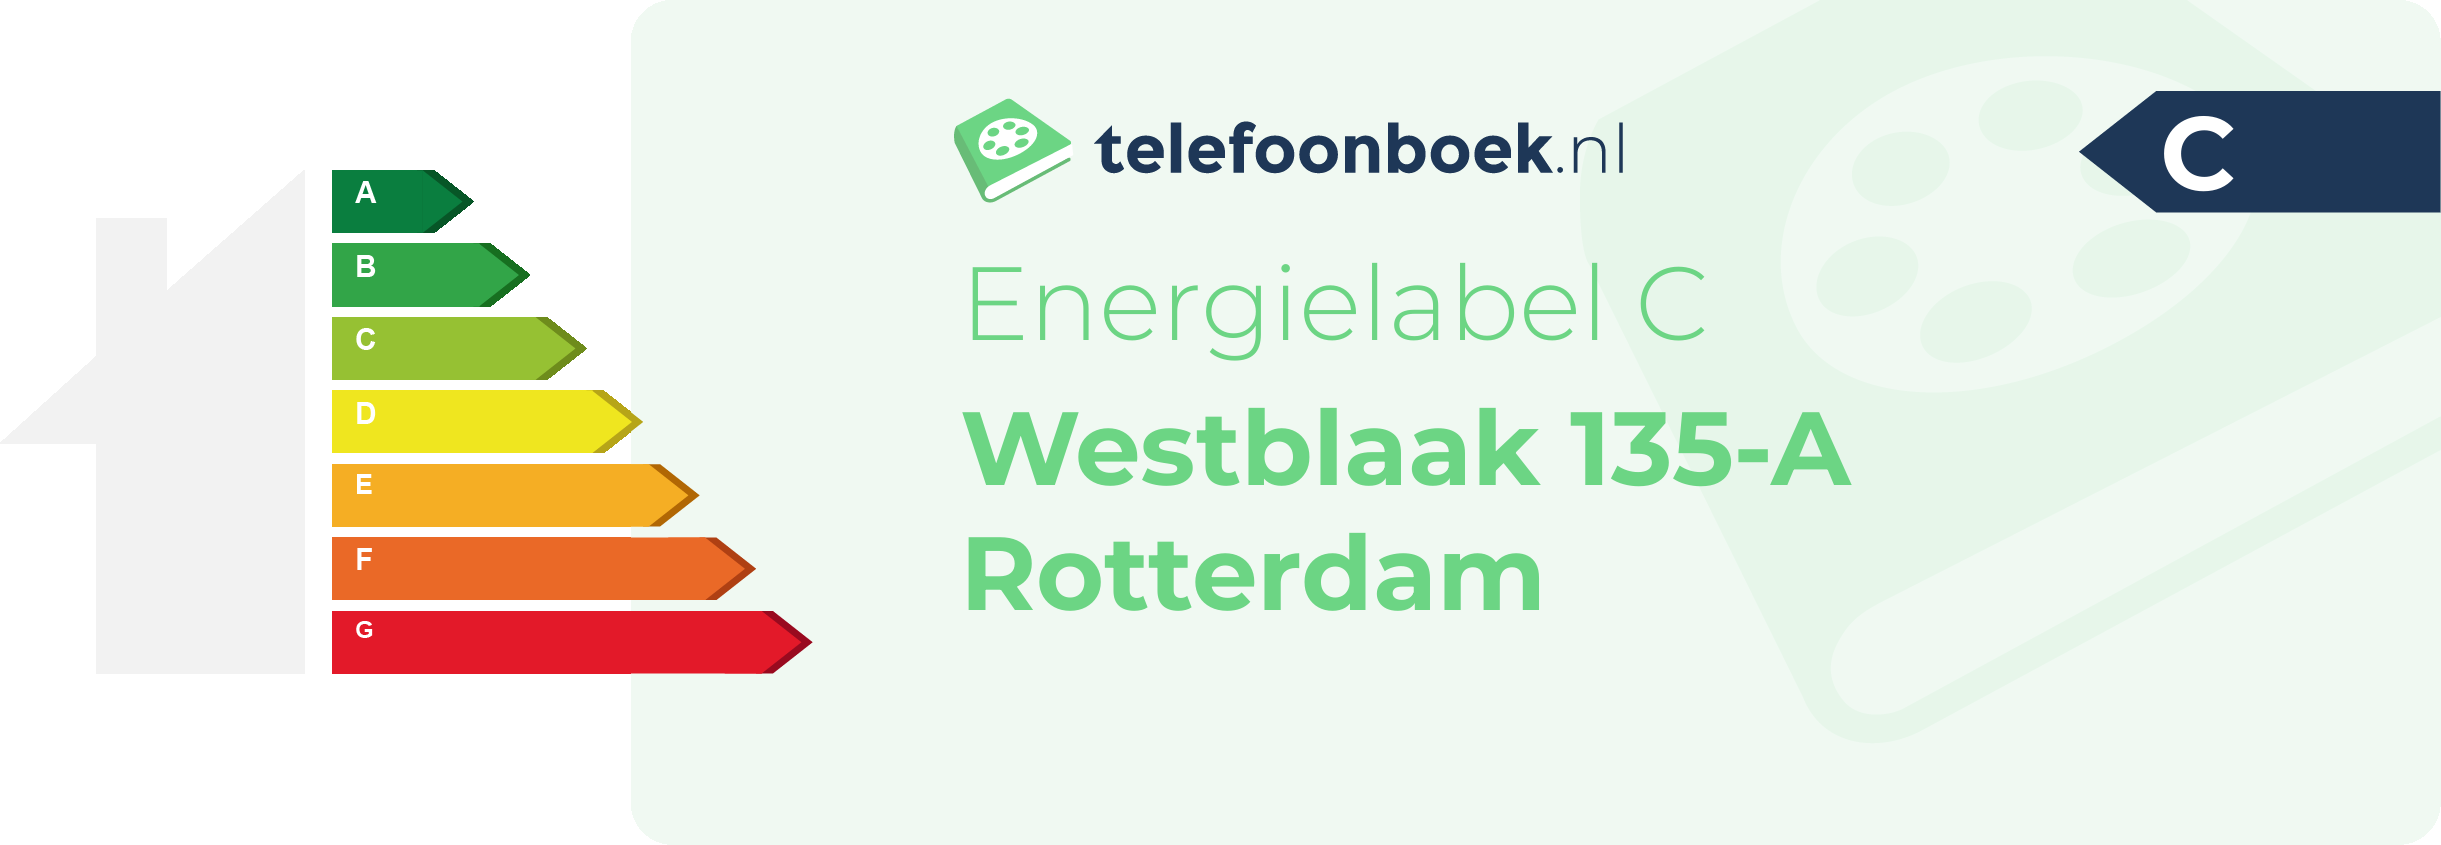 Energielabel Westblaak 135-A Rotterdam